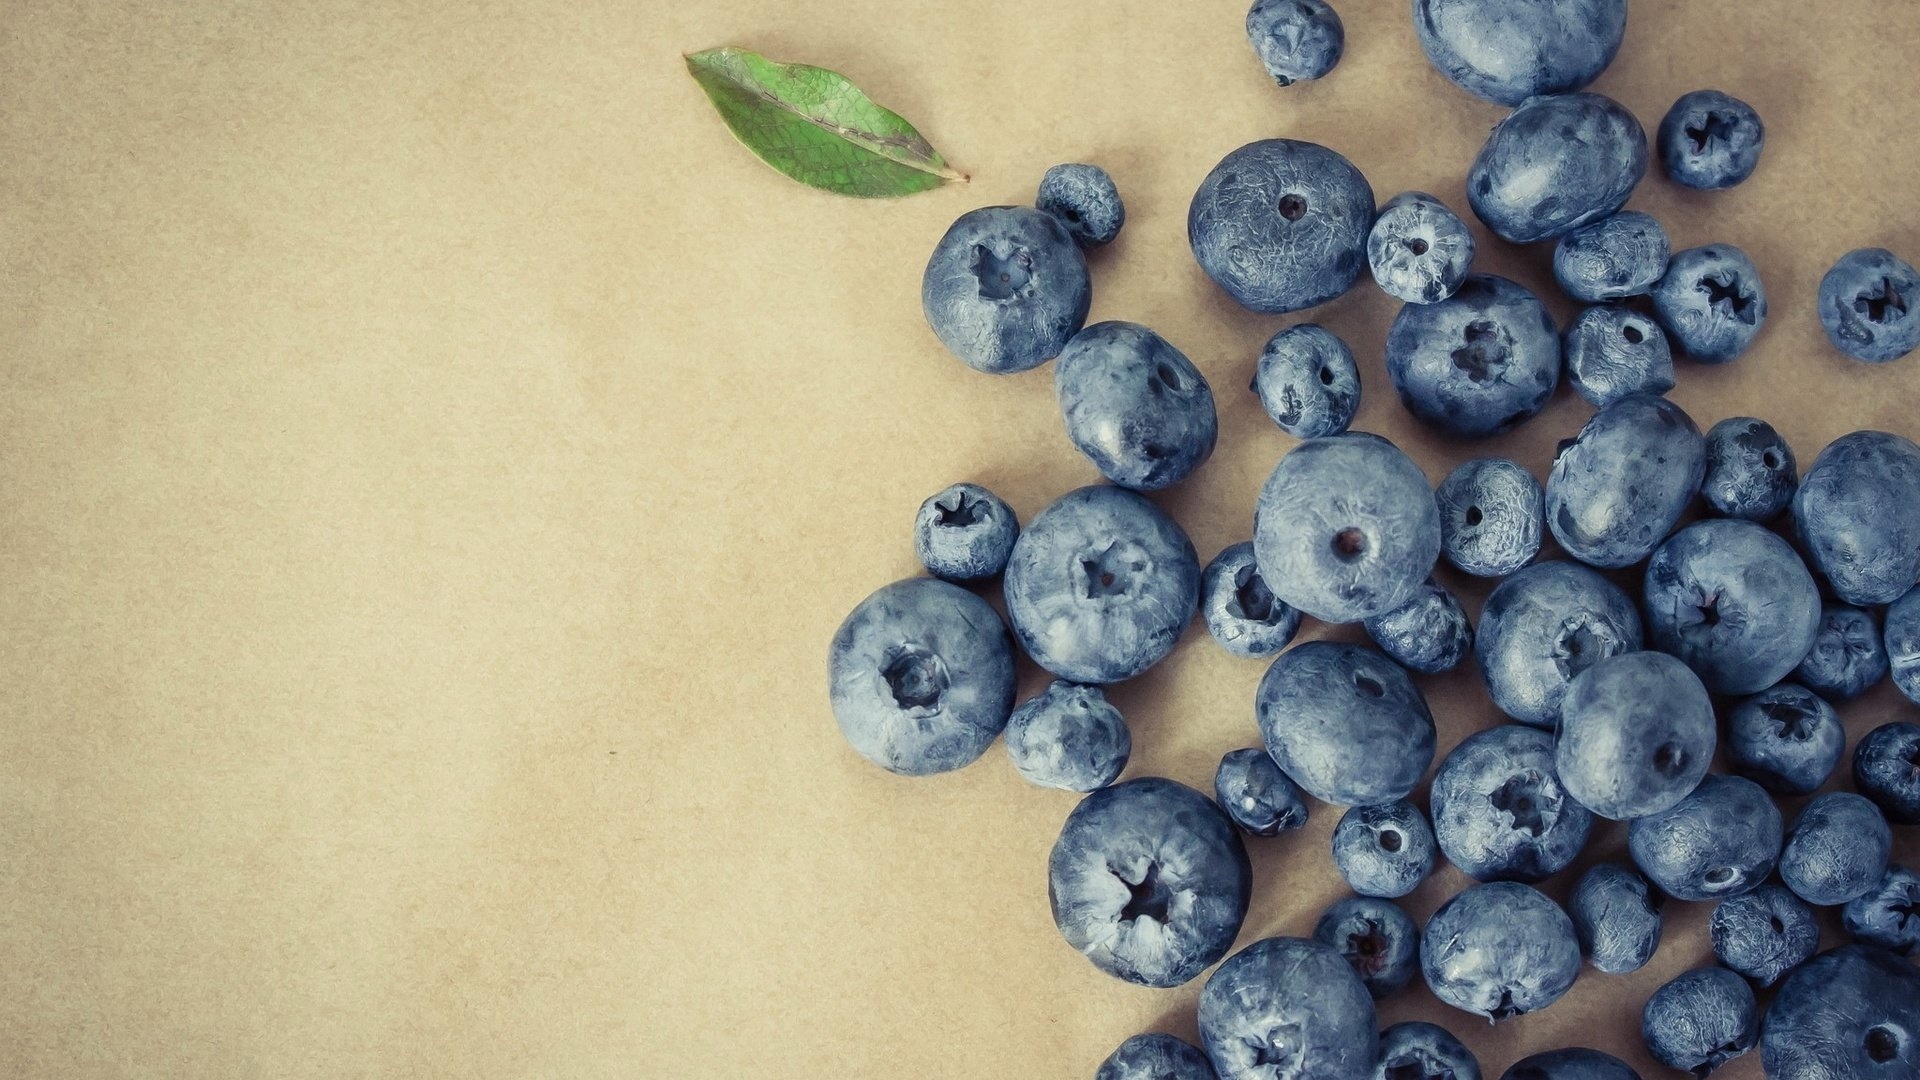 Blueberries wallpaper photo hd